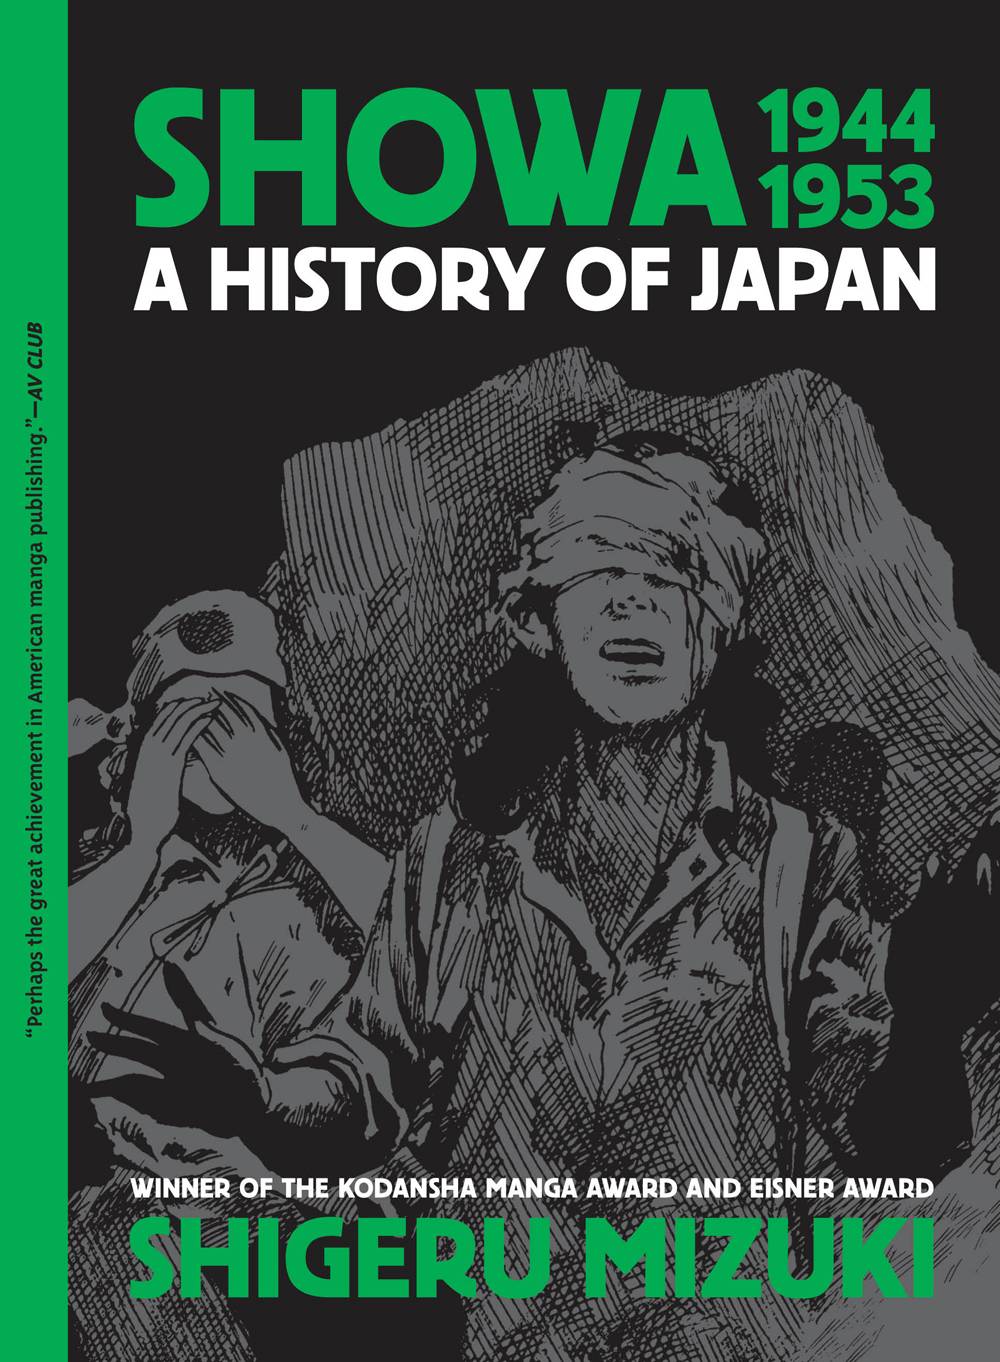 SHOWA HISTORY OF JAPAN GN VOL 03 1944-1953 SHIGERU MIZUKI (N